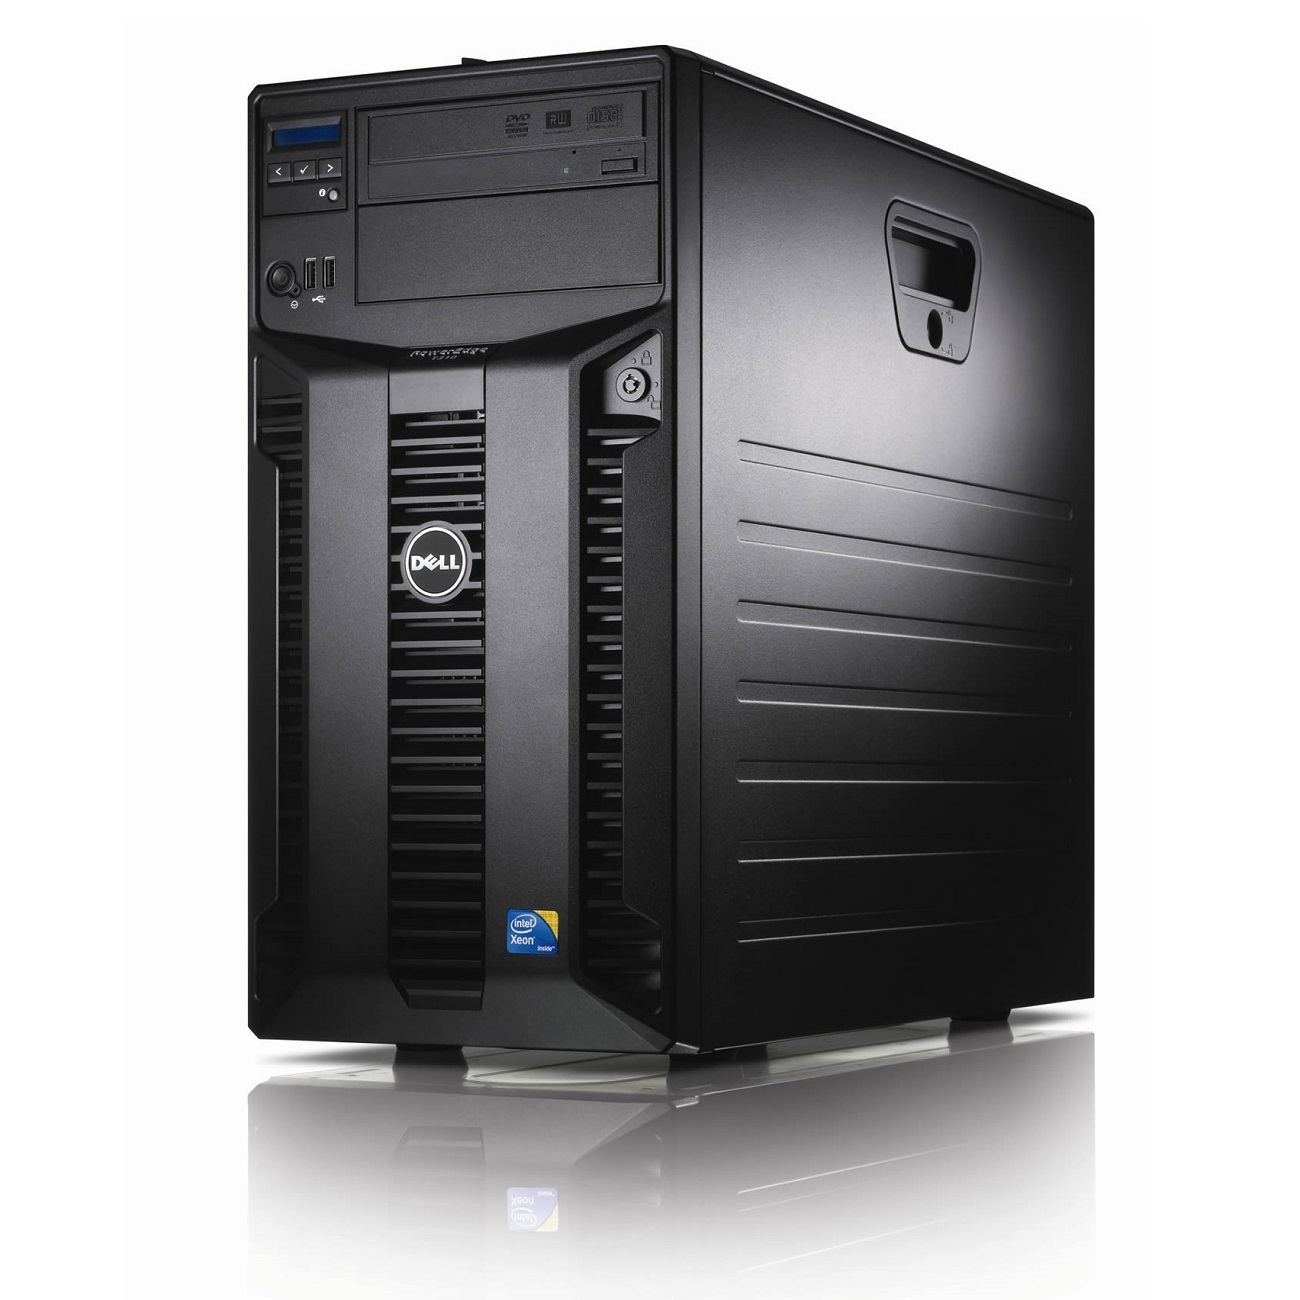 Máy chủ Dell PowerEdge T310-X3440 - Intel Xeon X3440 2.53 GHz, 4GB RAM, 500GB HDD